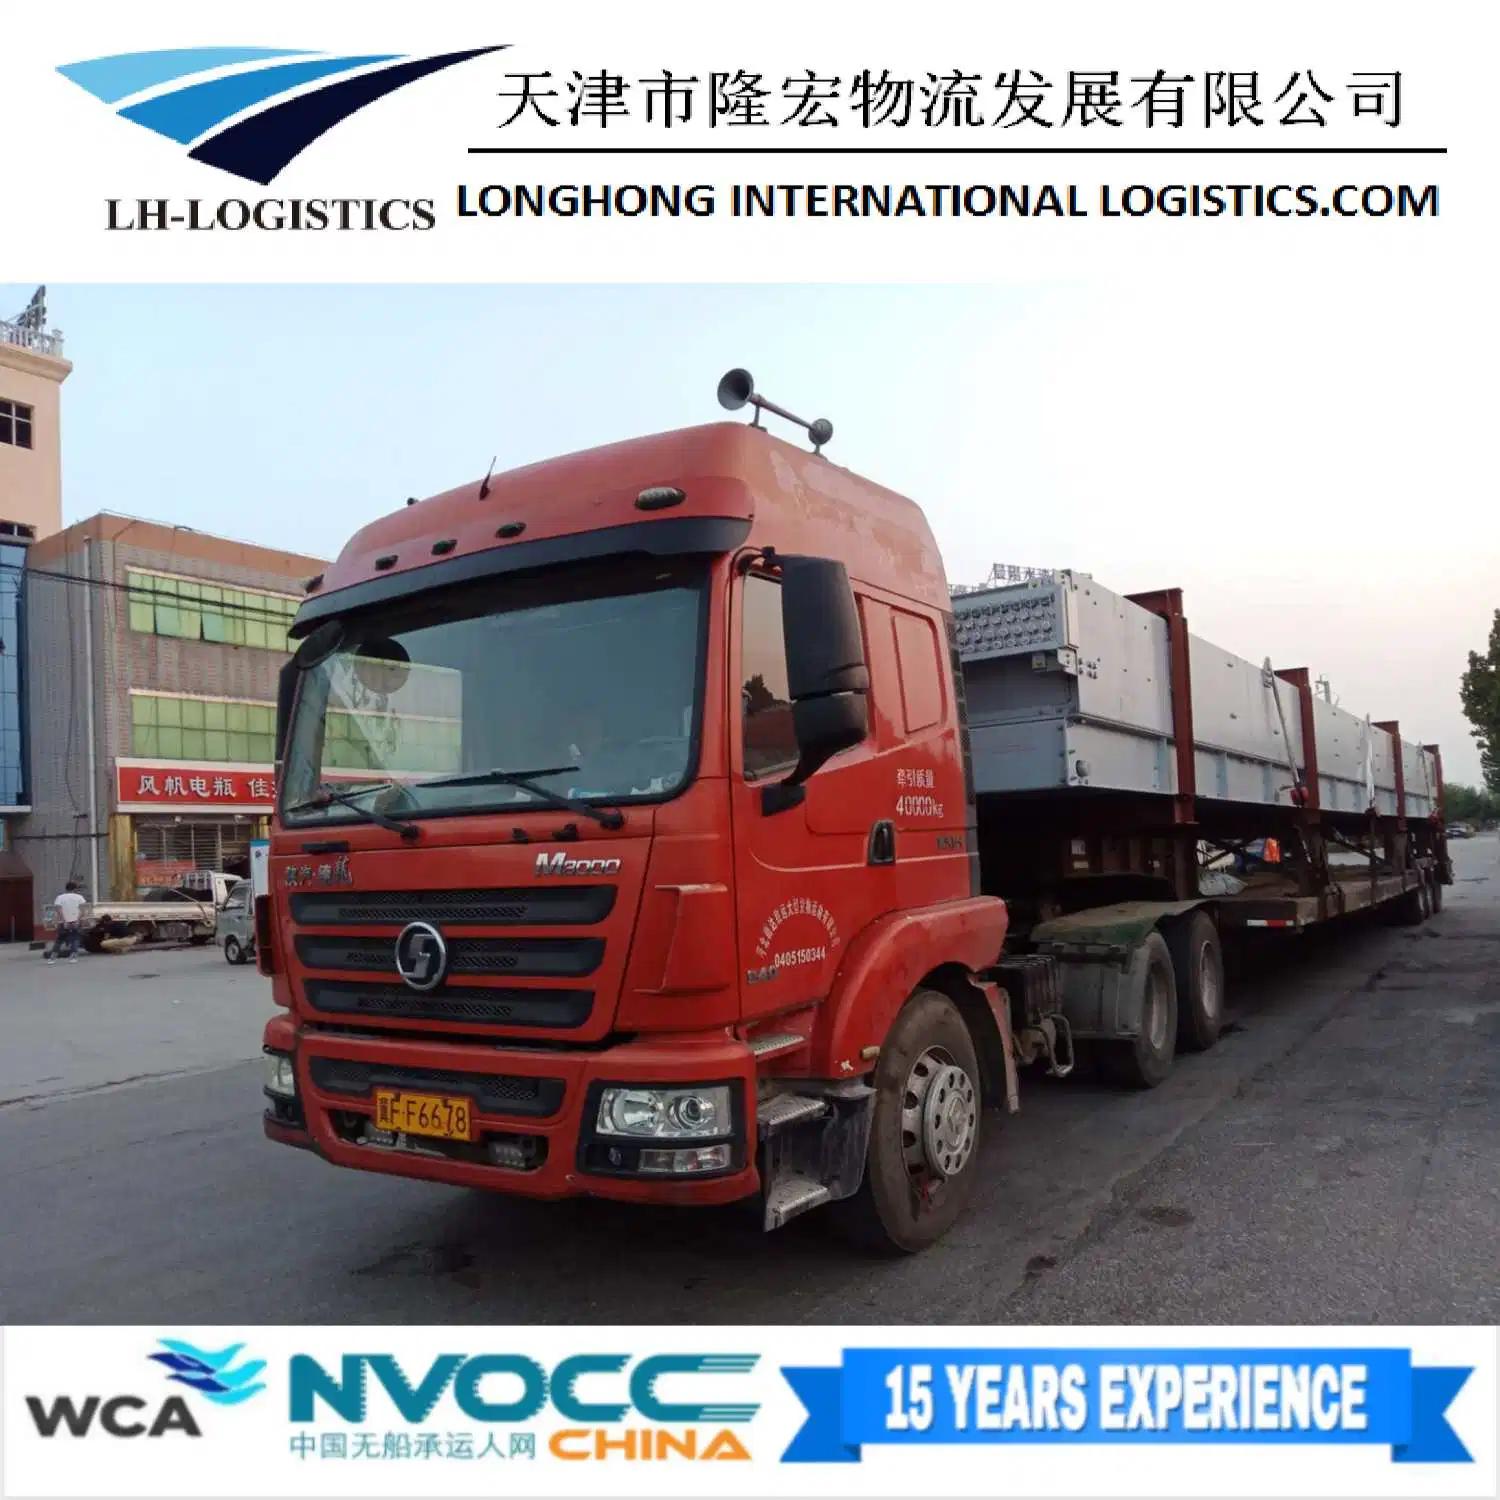 Professional Shipping Service From China to Uzbekistan, Tajikistan, Kyrgyzstan, Kazakhstan, Turkmenistan, as Well as Train Transportation